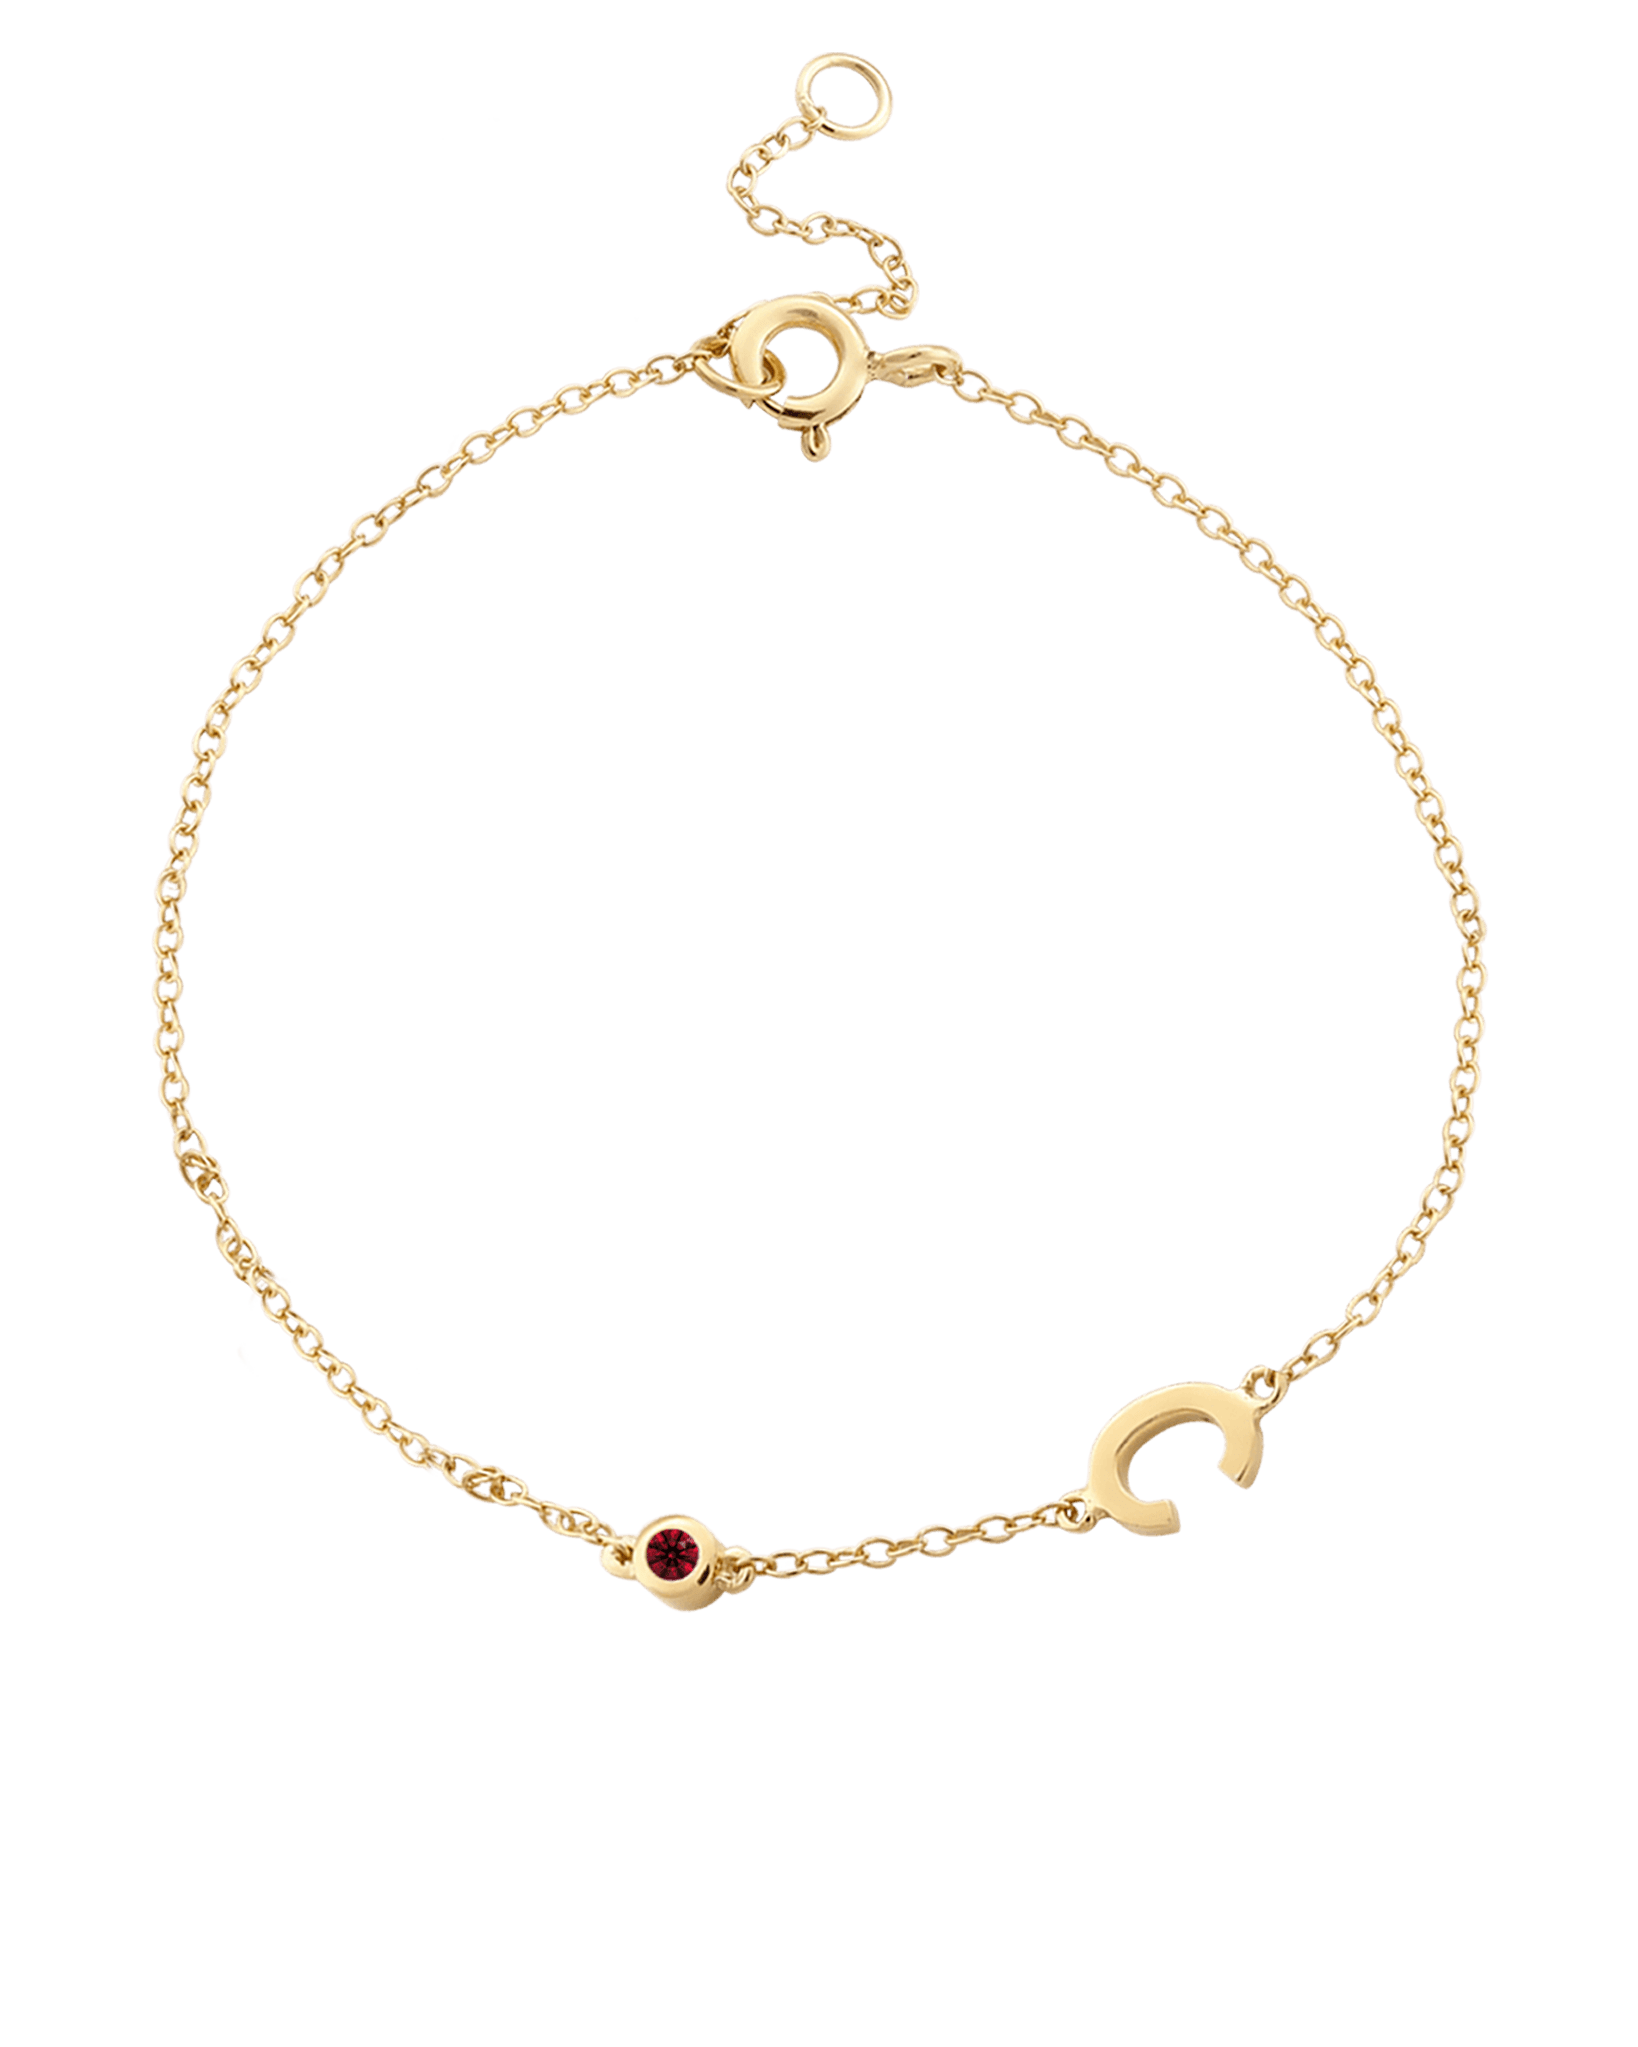 The Initial Birthstone Bracelet - 18K Gold Vermeil Bracelets magal-dev 